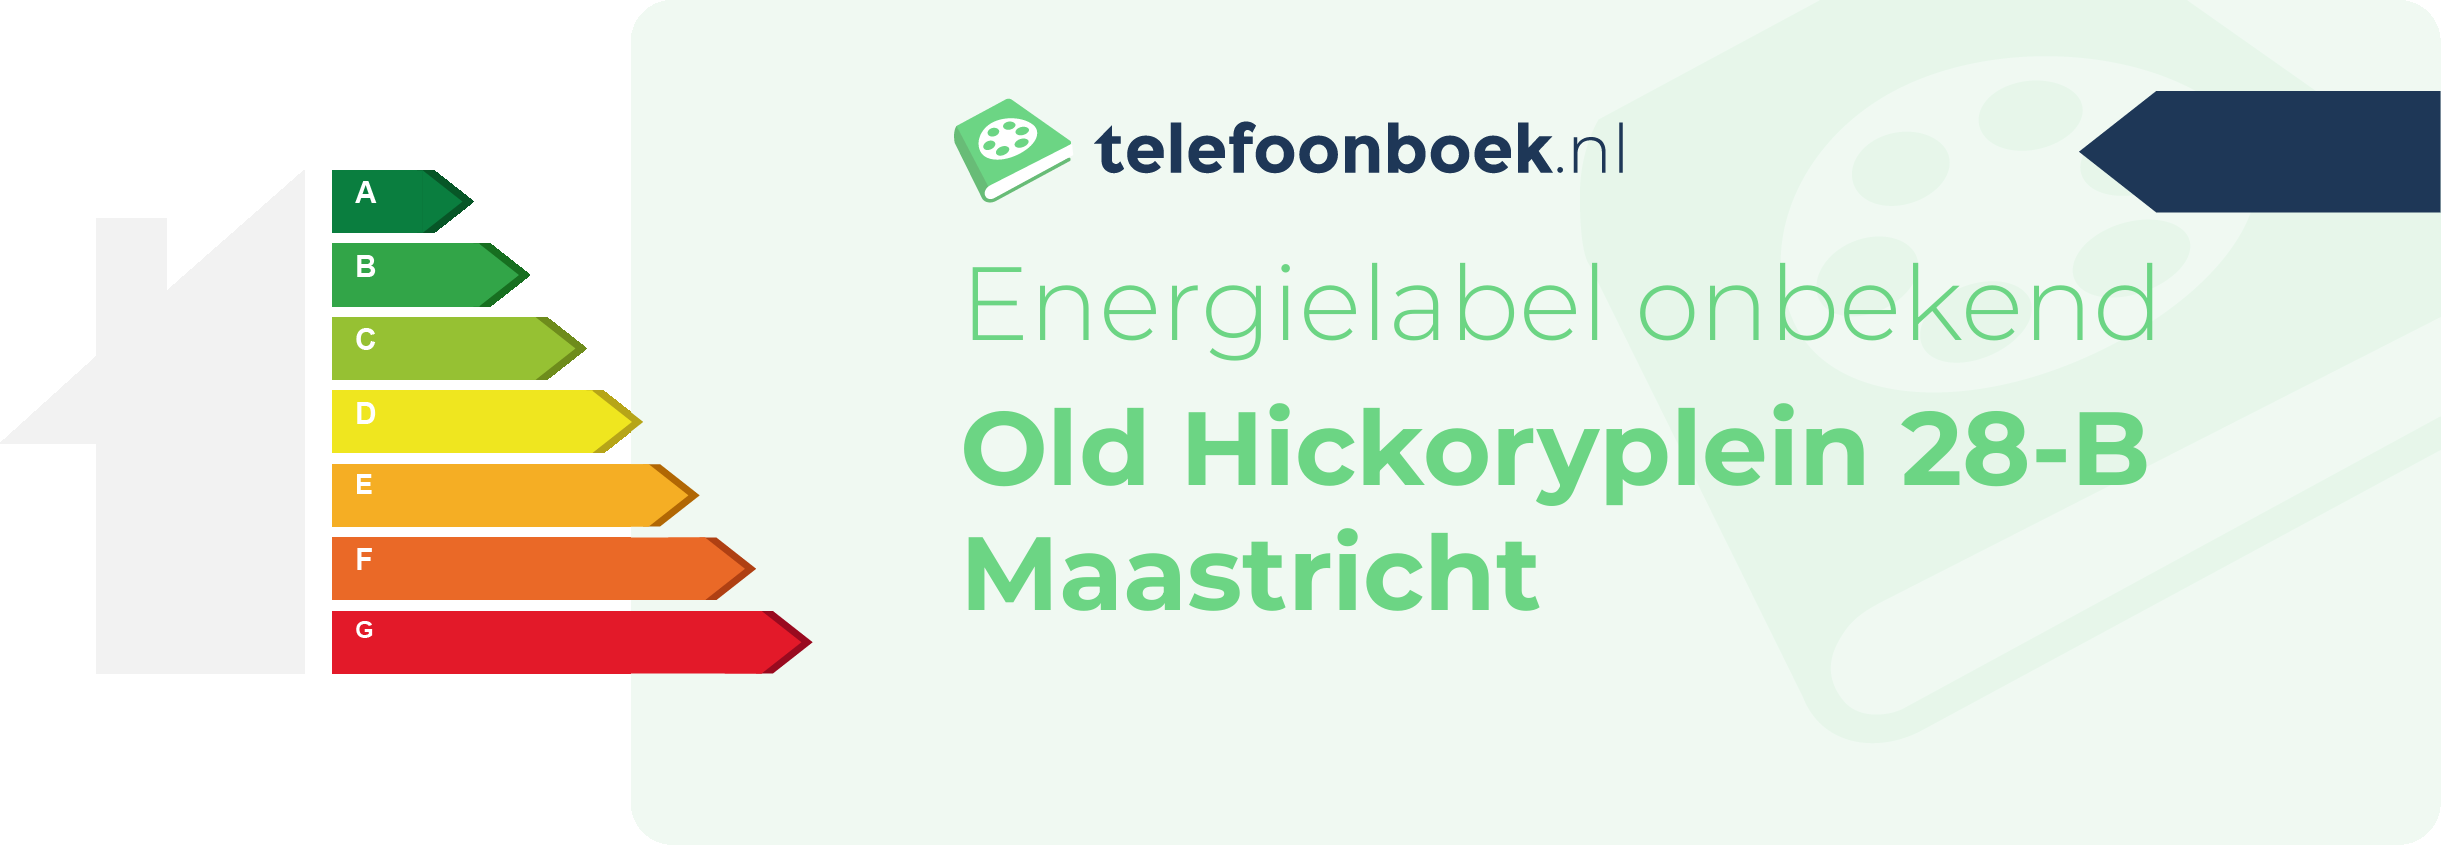 Energielabel Old Hickoryplein 28-B Maastricht